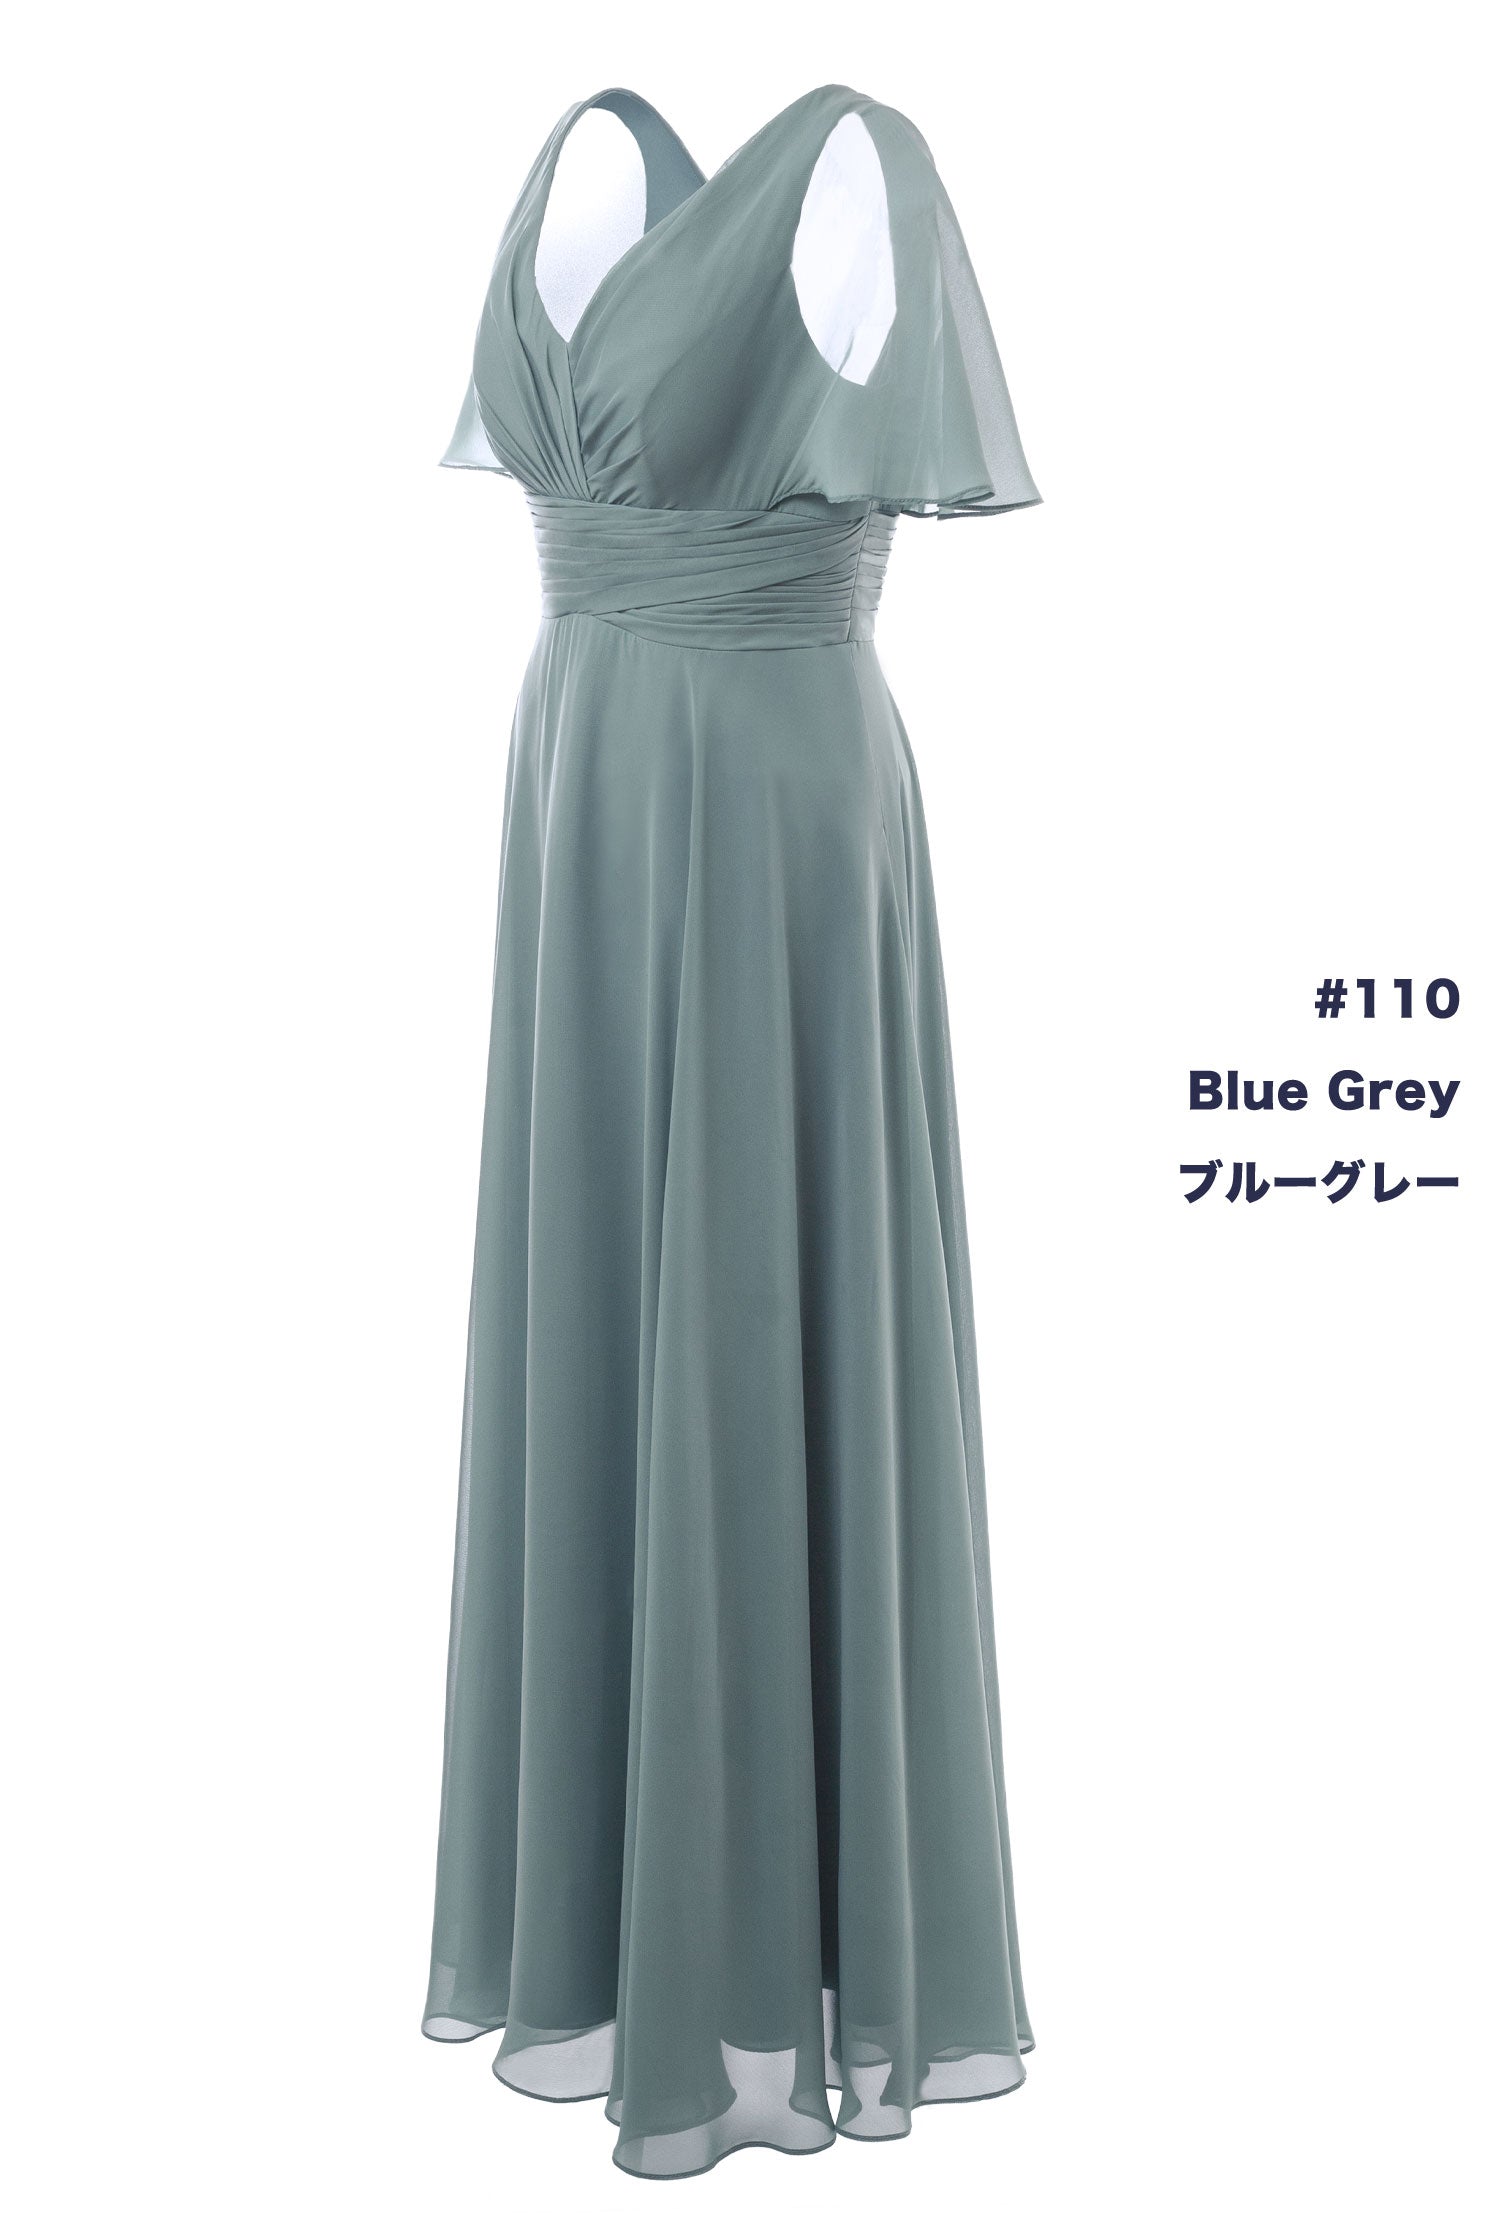 NV1014 Dolman sleeve long dress 150 colors